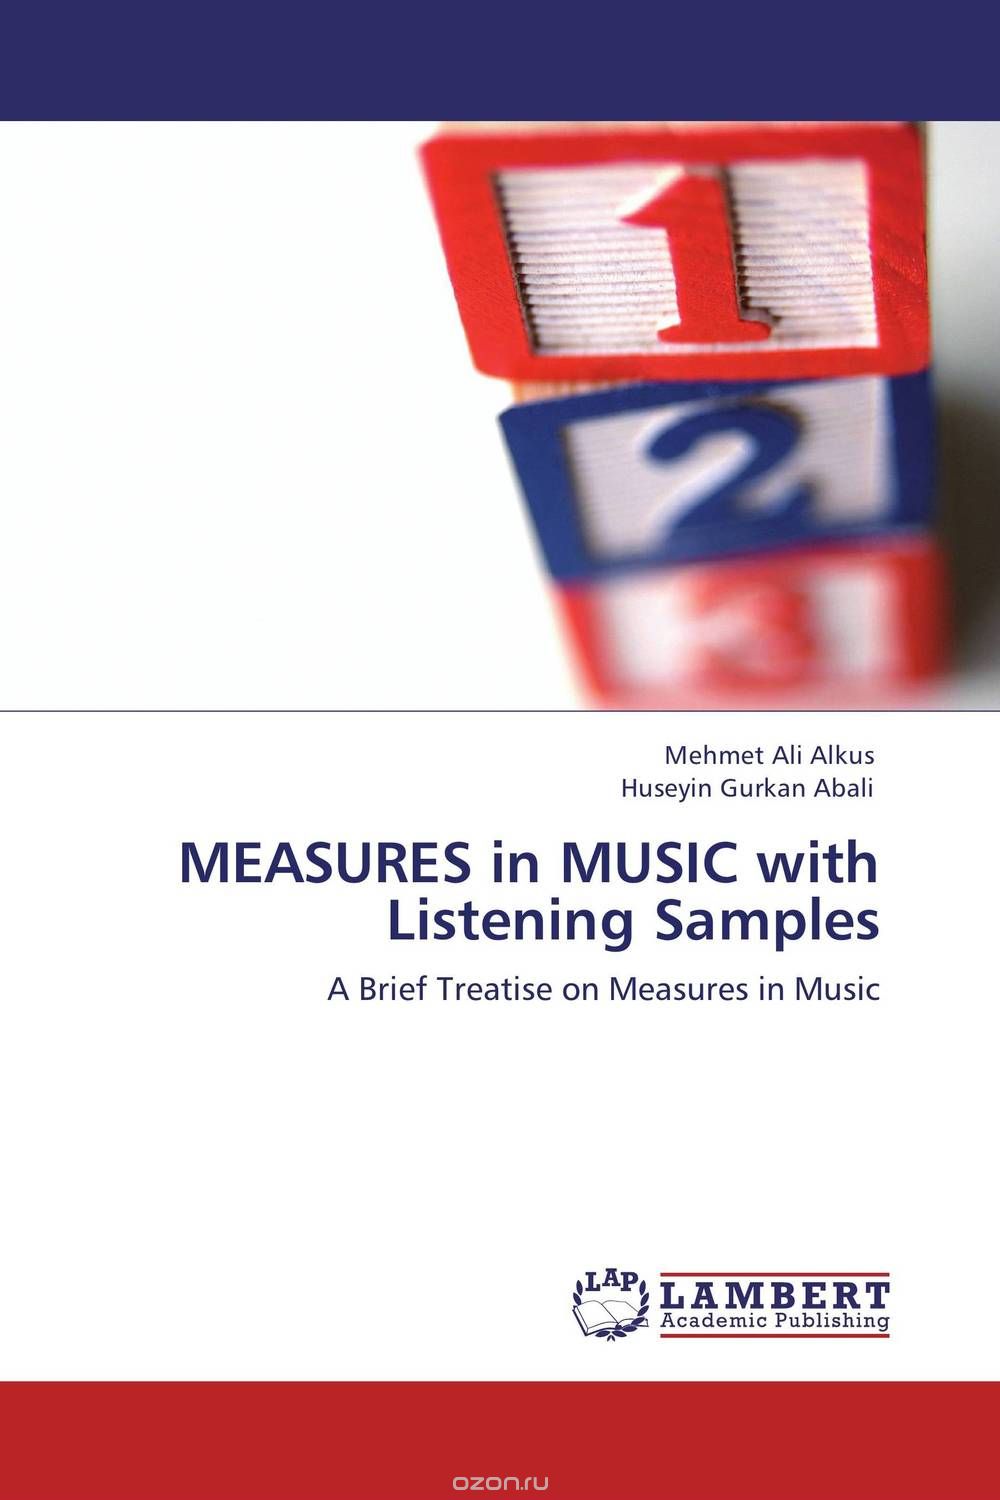 Скачать книгу "MEASURES in MUSIC with Listening Samples"